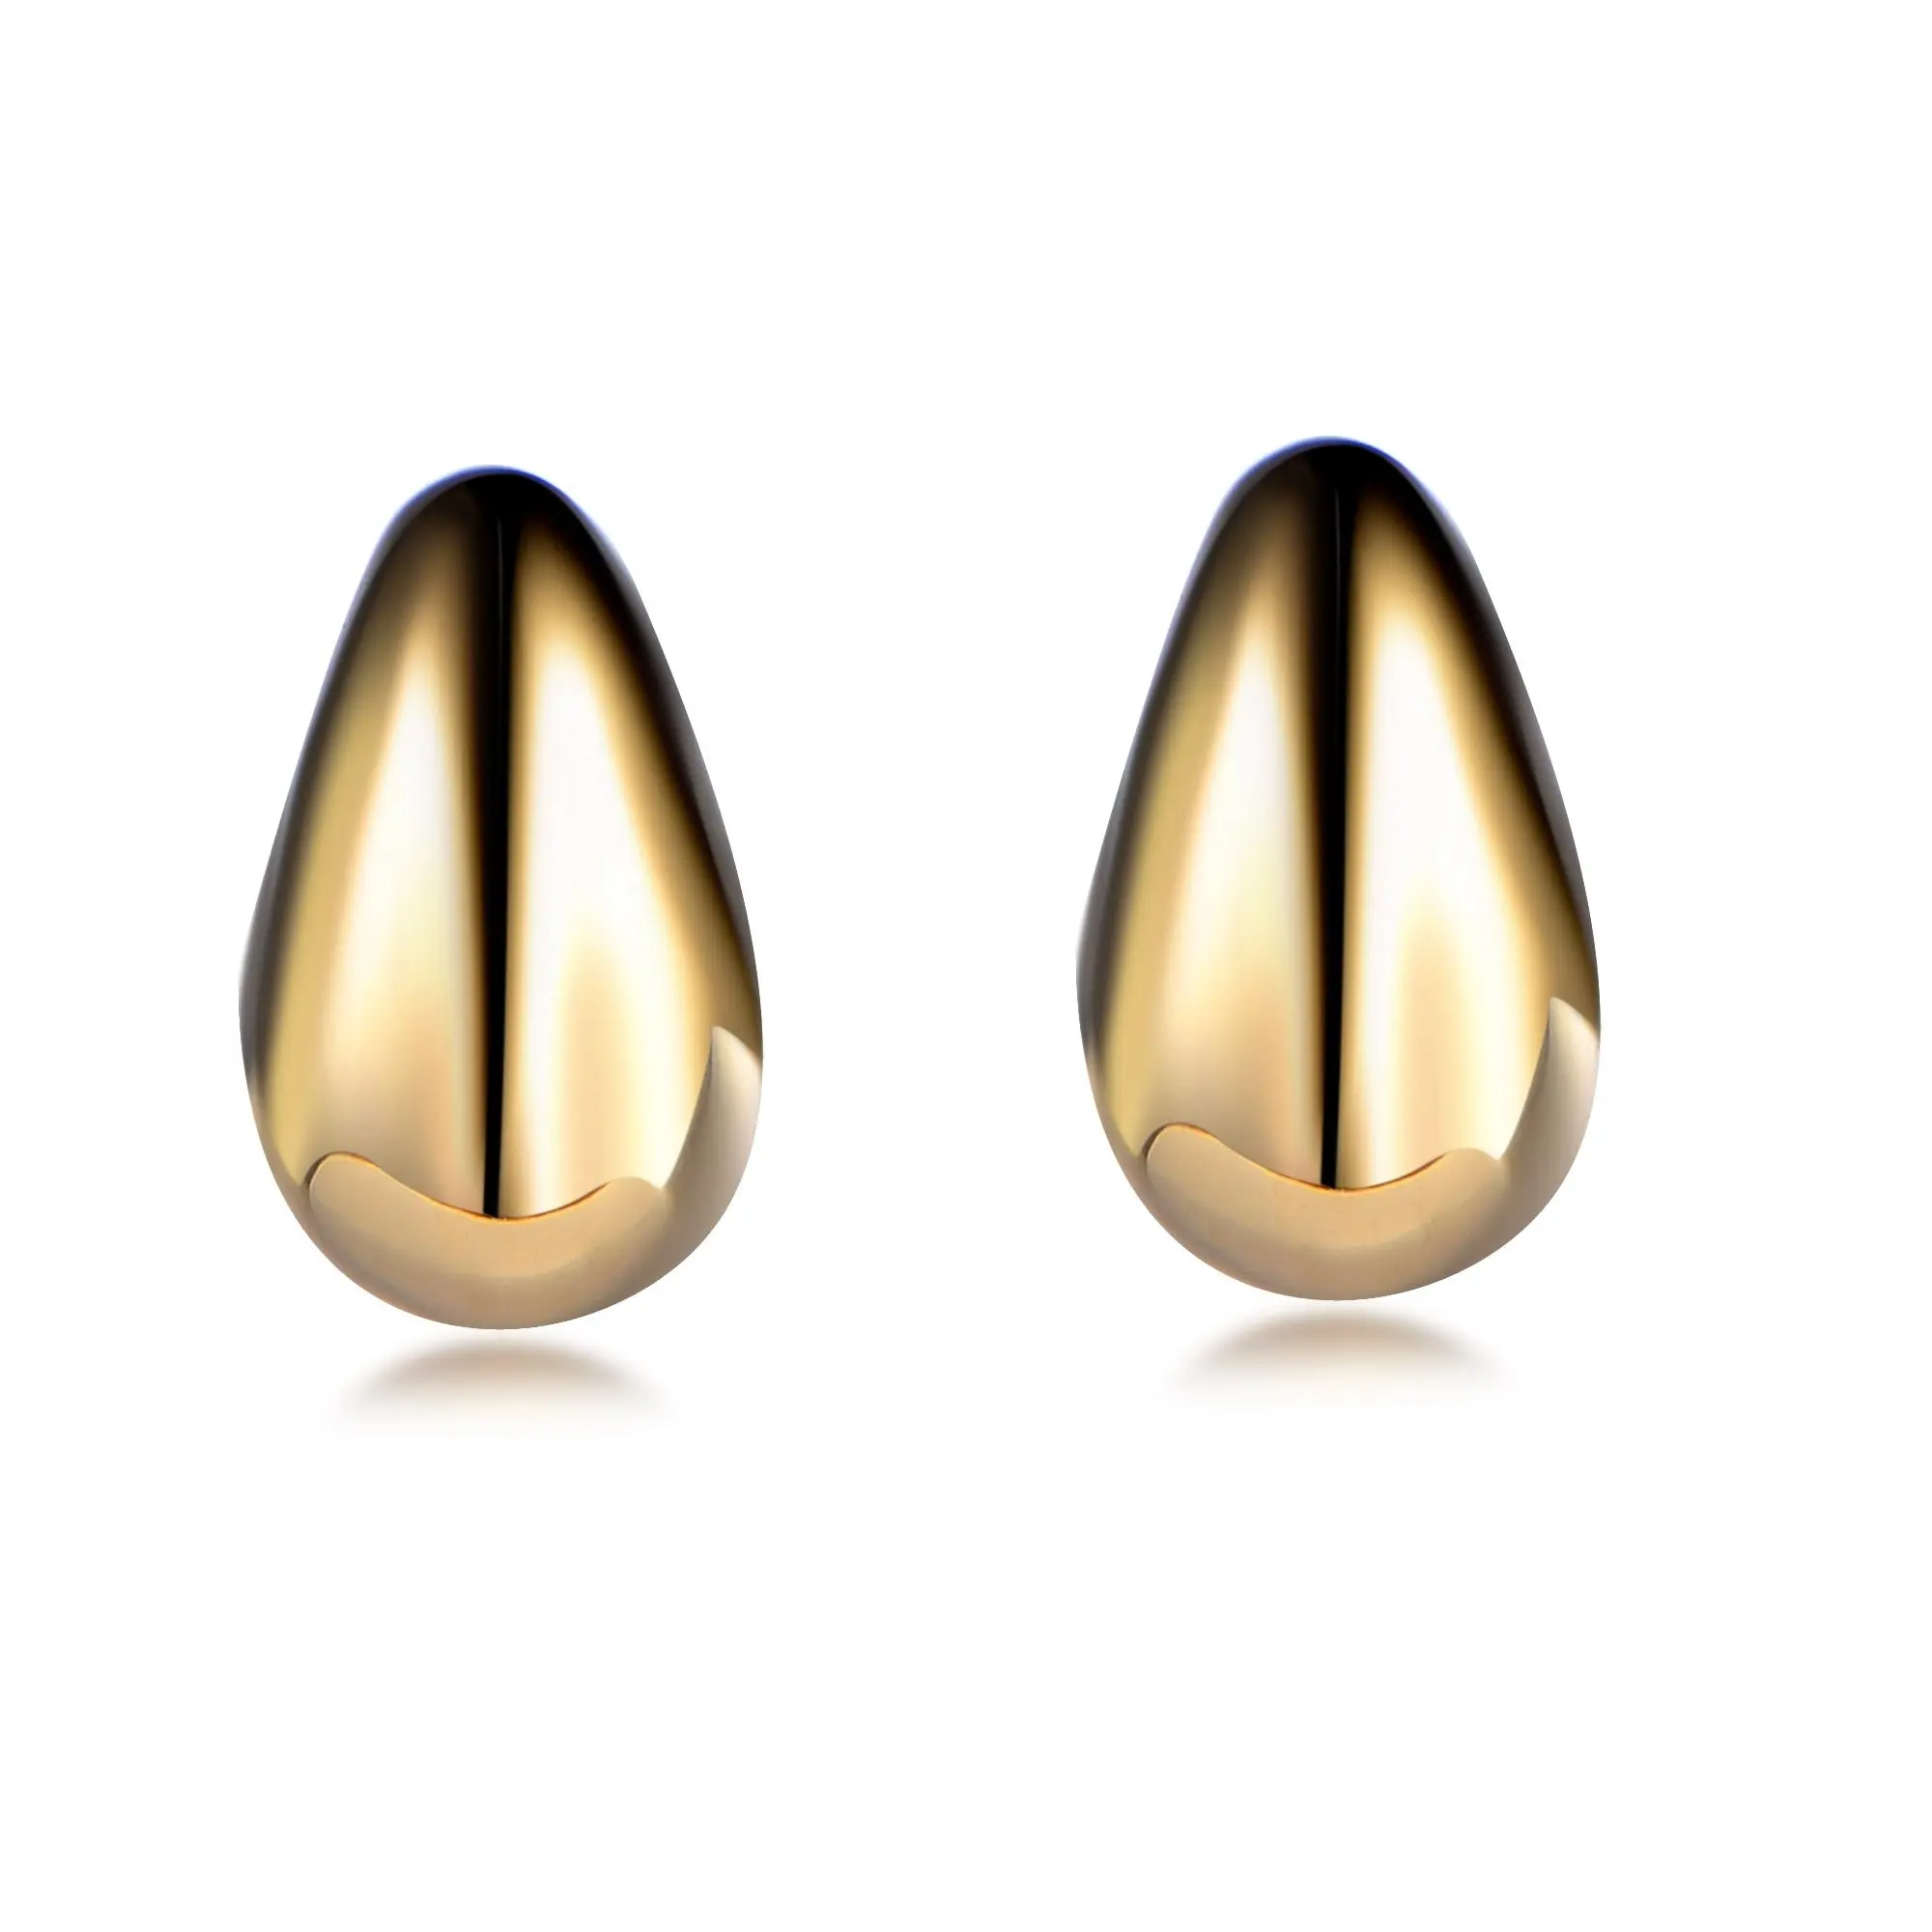 Hip Hop 14k solid gold earrings 14k gold filled earrings golg-plated 925 sterling silver ear ring gold hammered stud earrings